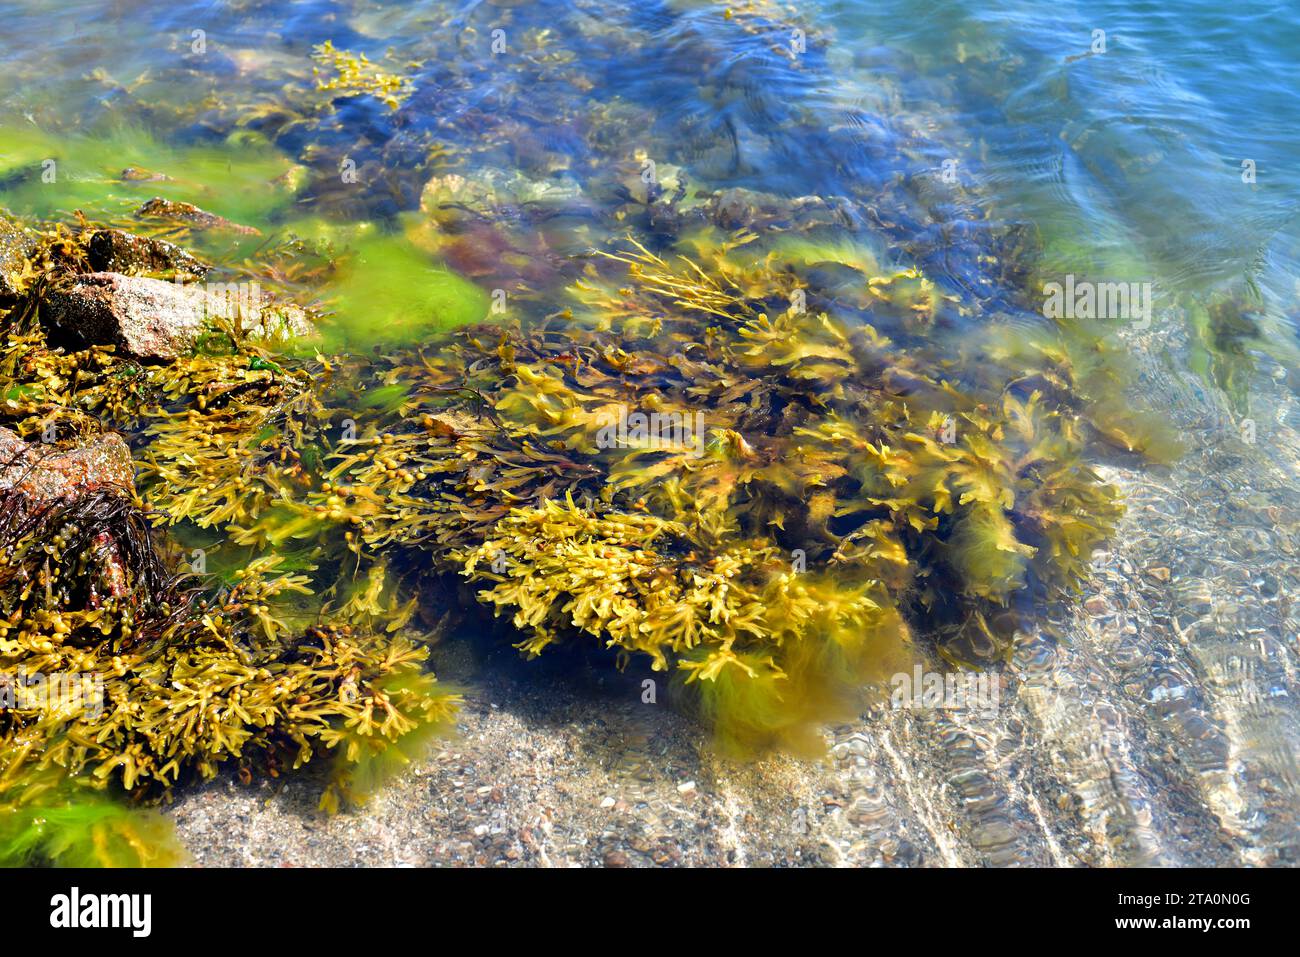 Serrated wrack (Fucus serratus) is a brown alga native to Atlantic Ocean. This photo was taken in Bohuslan cosat, Sweden. Stock Photo